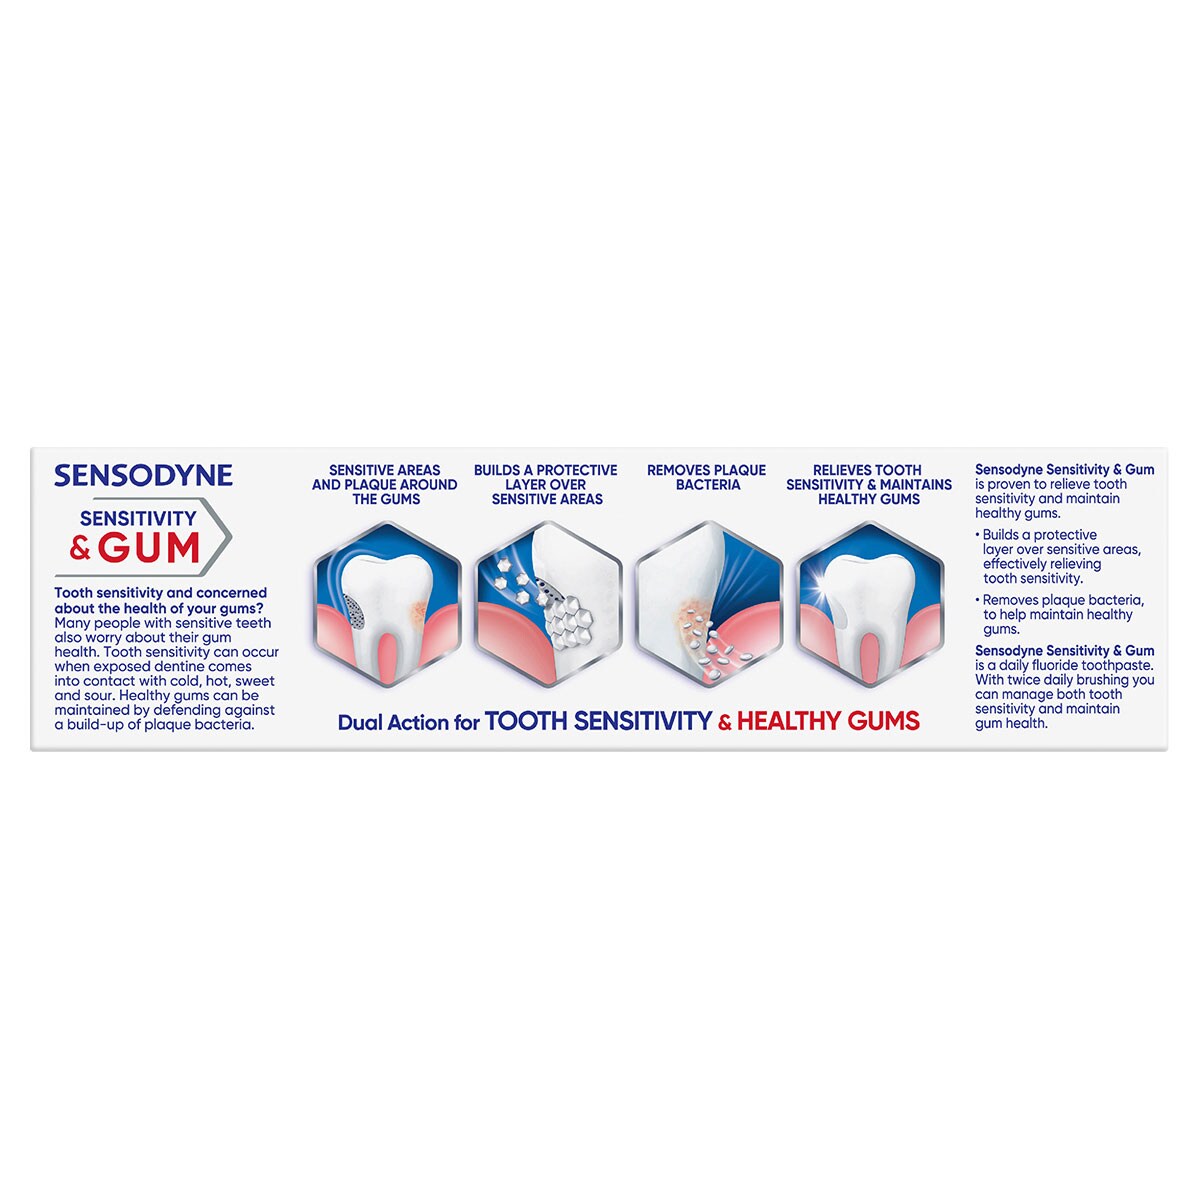 Sensodyne Sensitivity & Gum Care Toothpaste 100g